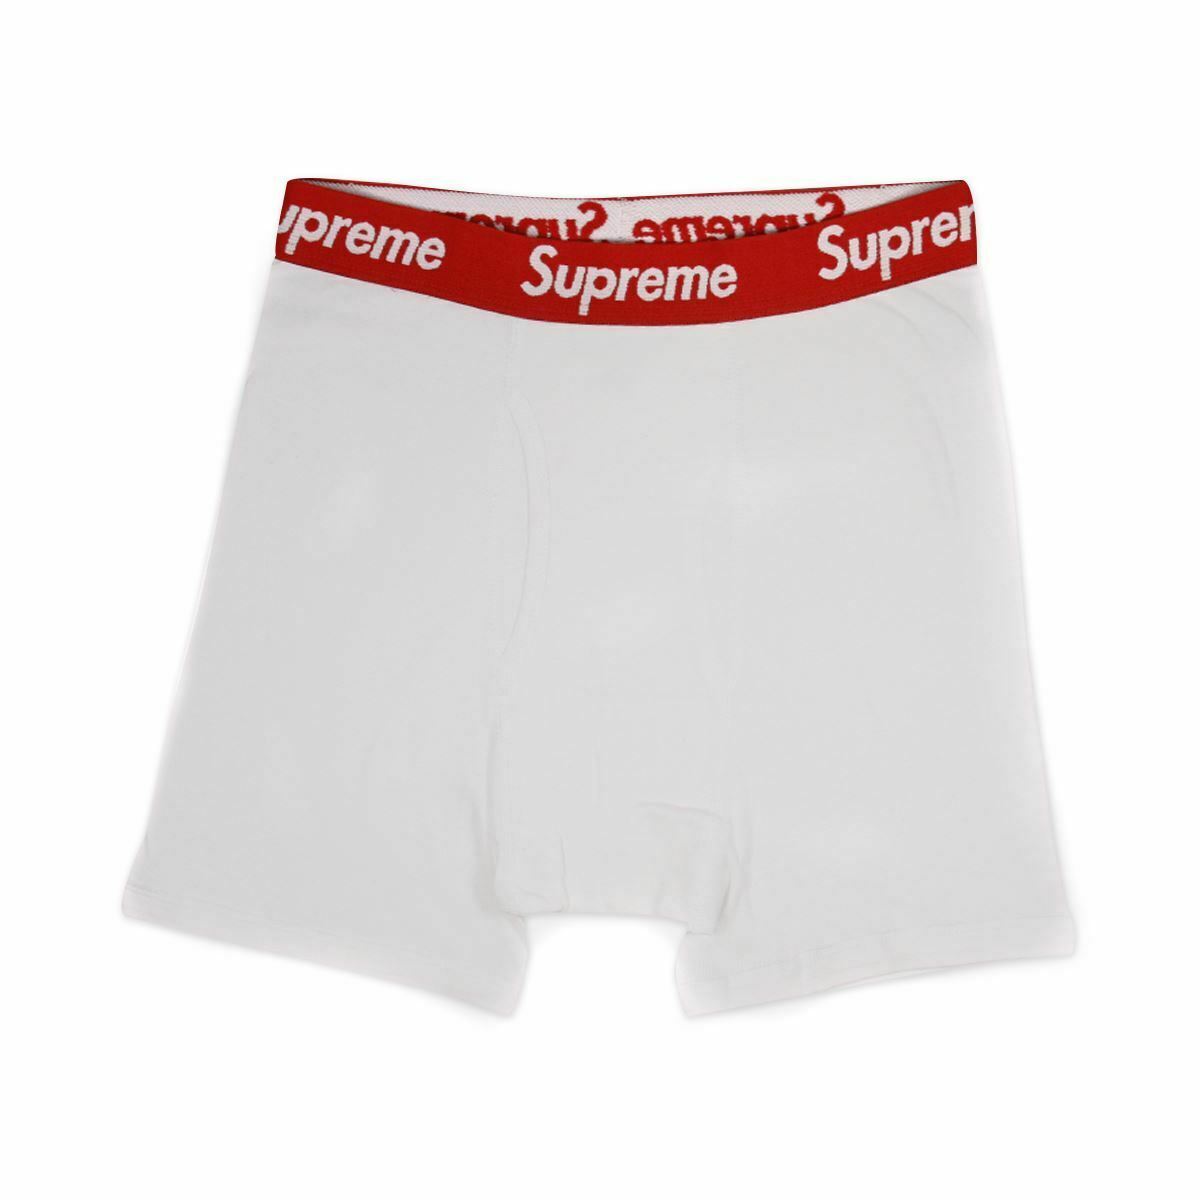 Supreme x Hanes Men's 100% Authentic Single Pack White Boxer Briefs